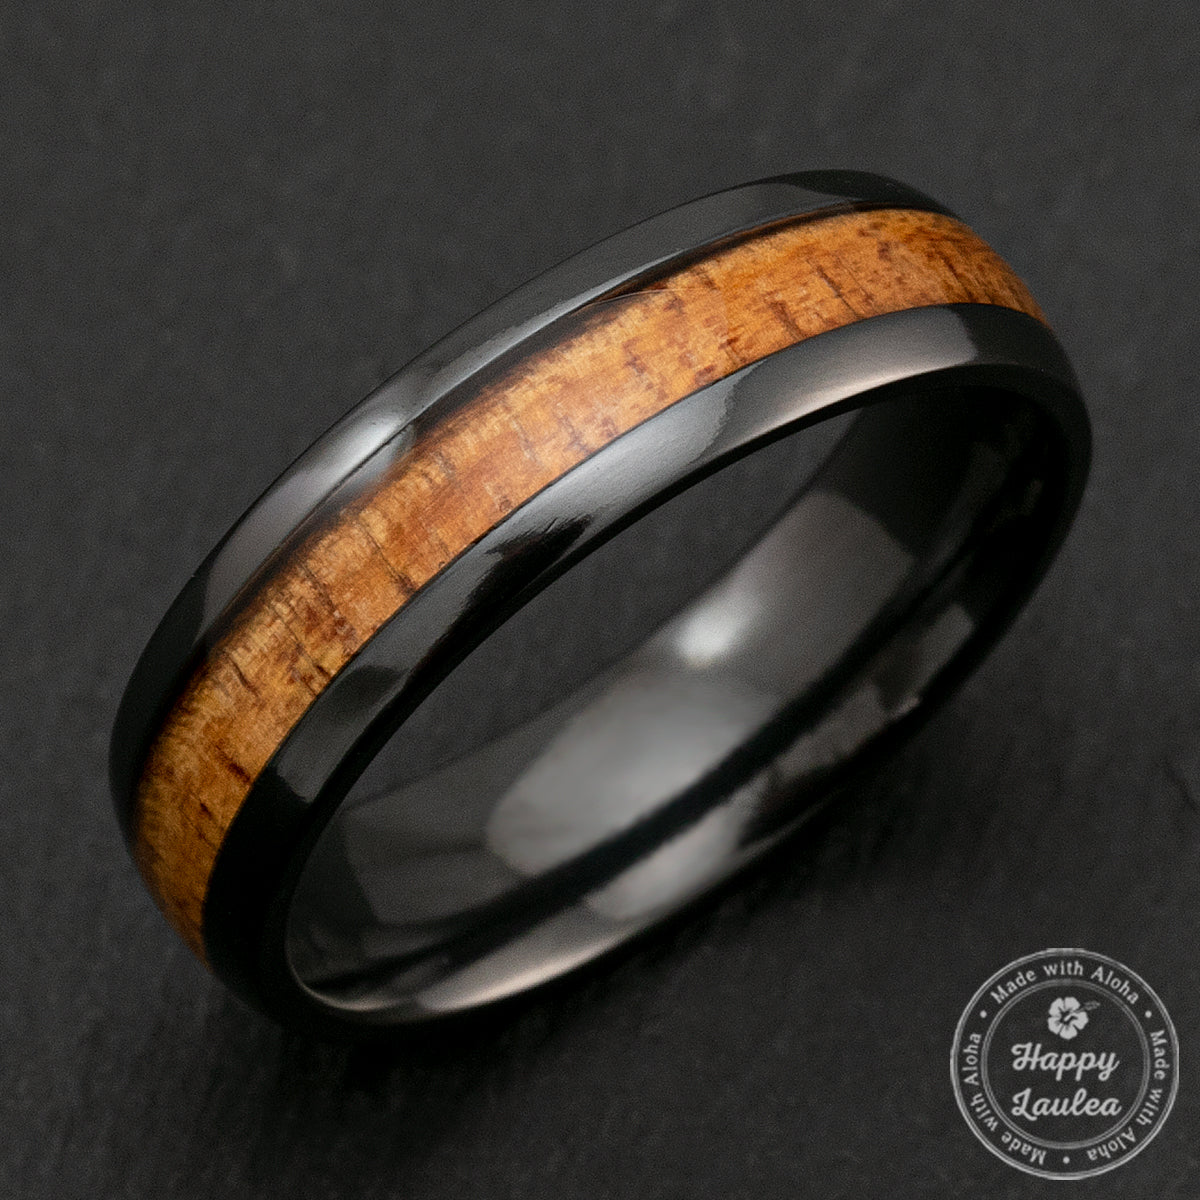 Black Zirconium 6mm Ring with Hawaiian Koa Wood Inlay - Dome Shape, Comfort Fitment